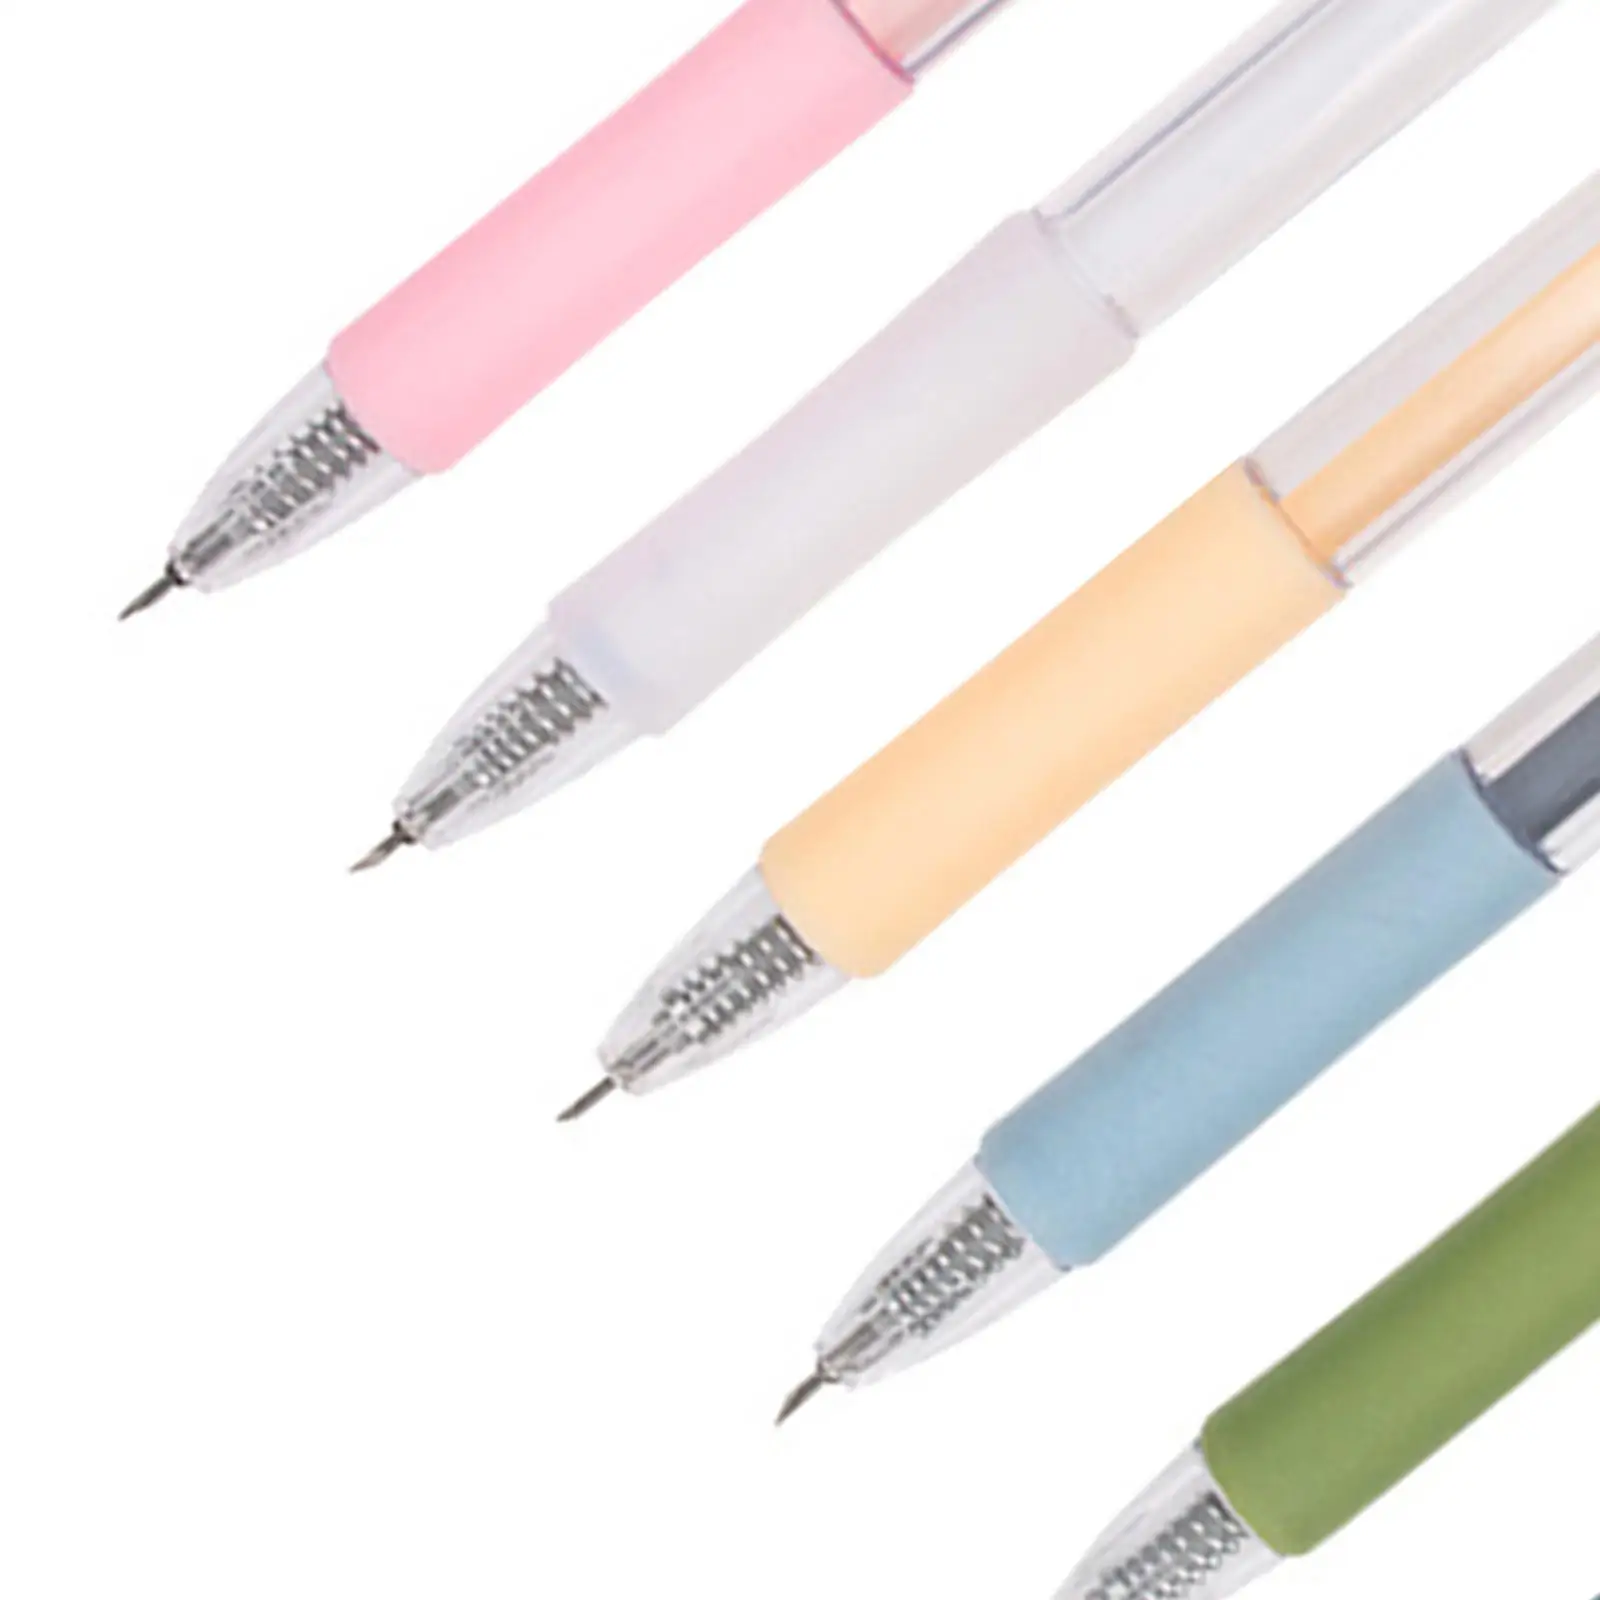 6x Paper Cutter Pen Utility Knife Craft Cutting Tool for Precision Paper Cutting